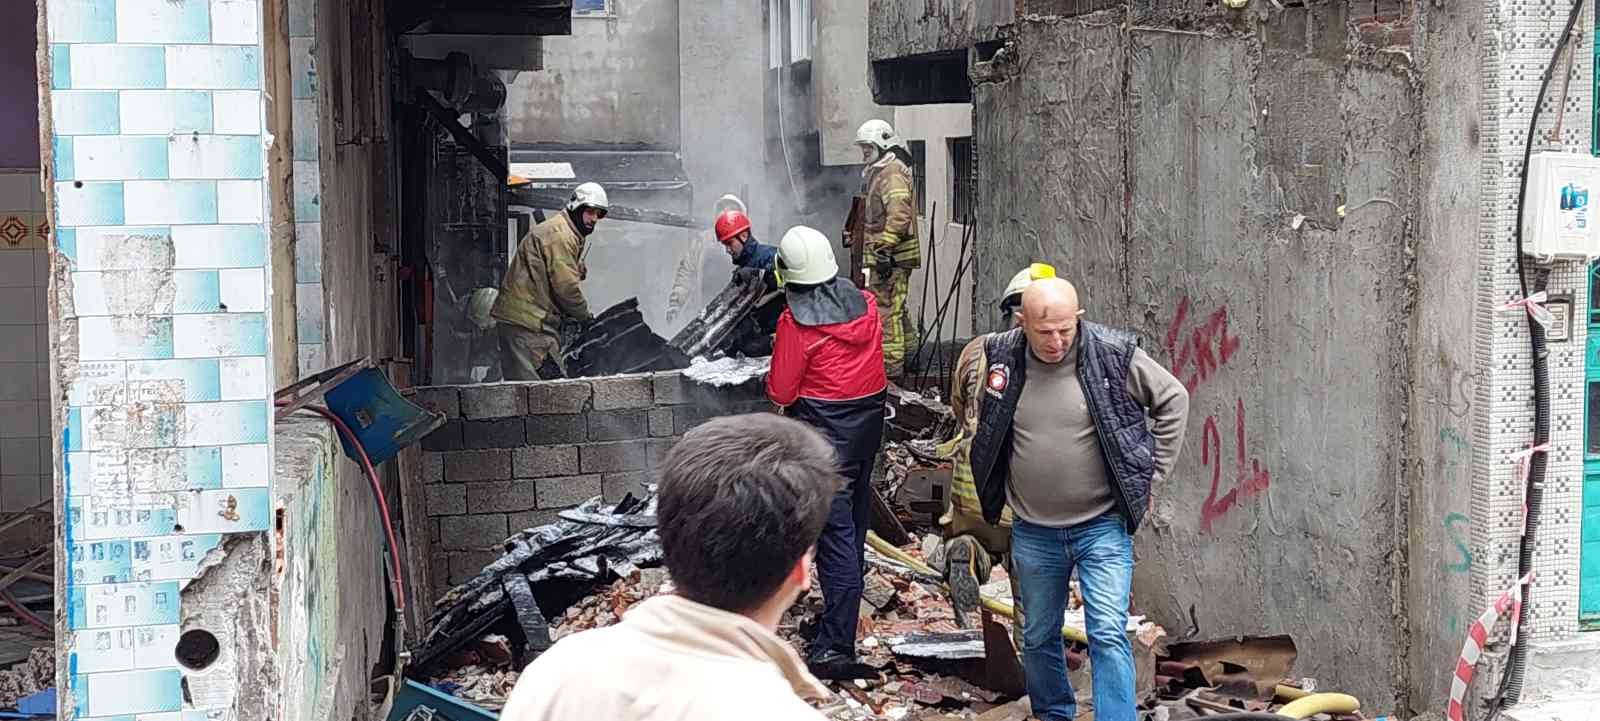 Gaziosmanpaşa’da hurdacıların ihmali yangına sebep oldu #istanbul